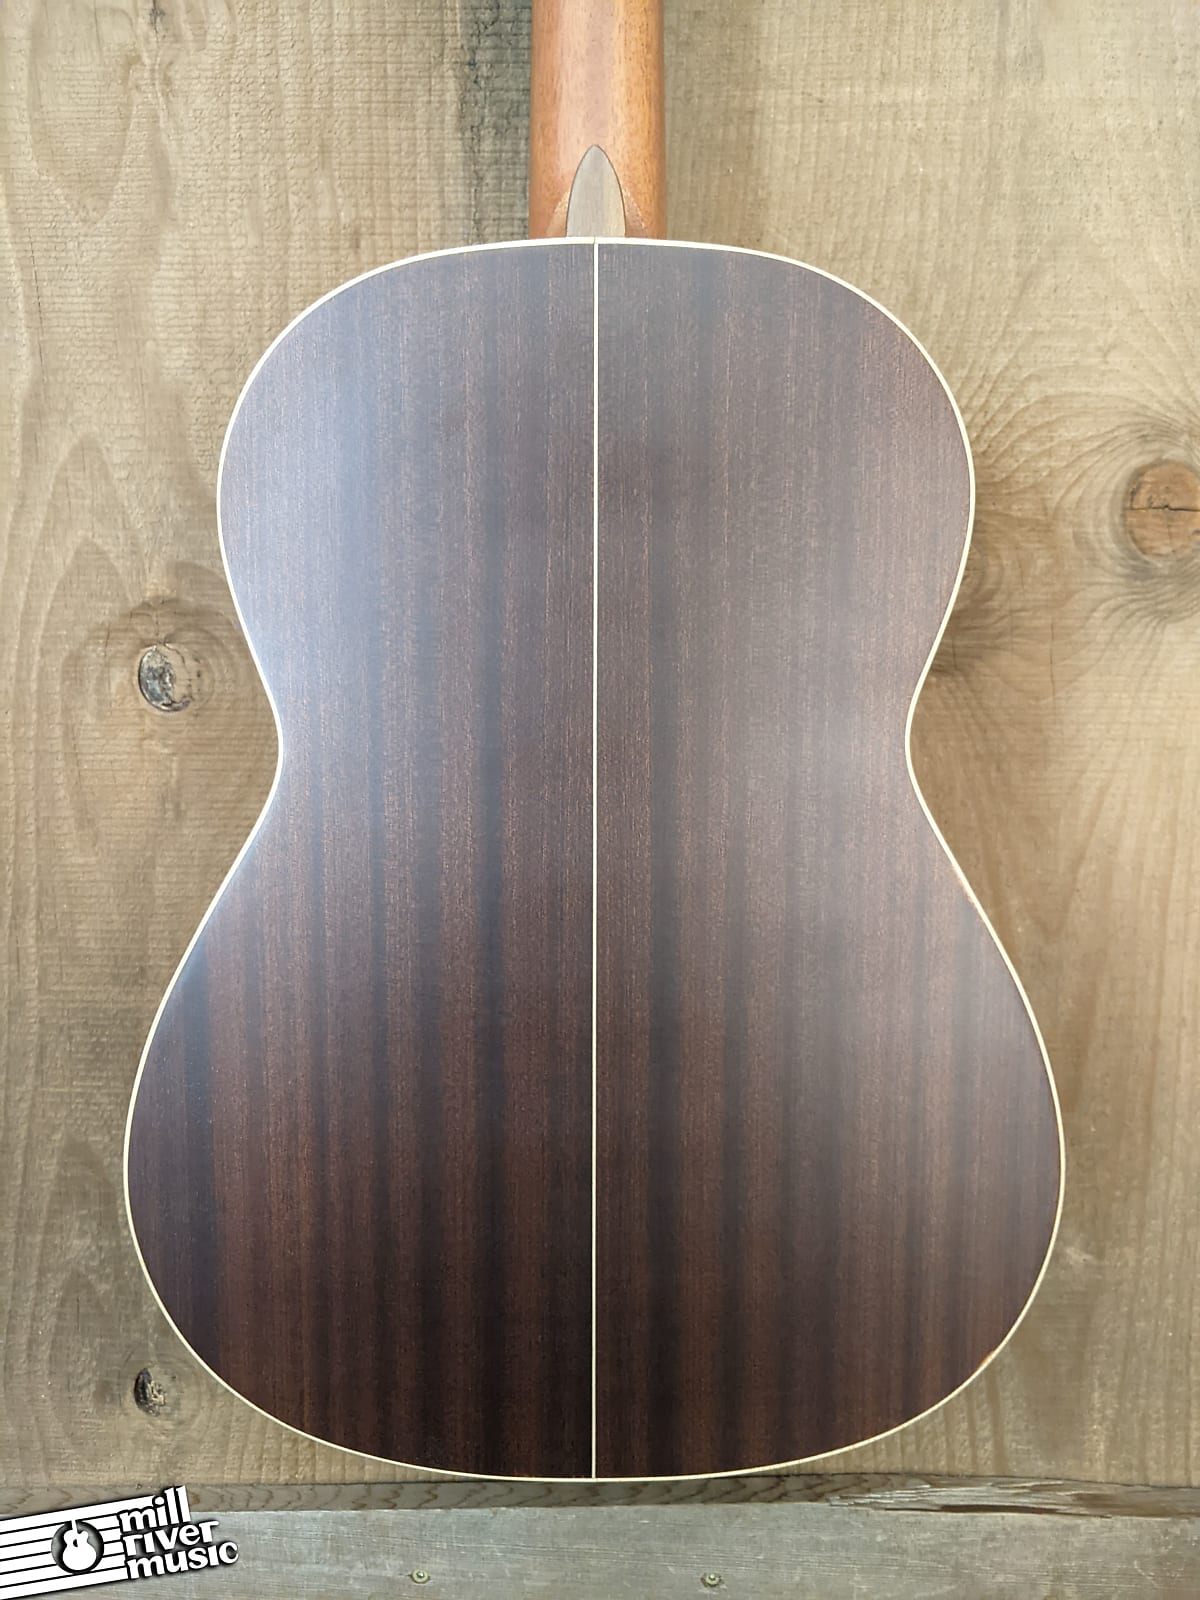 Ortega Traditional Series Cedar Top Nylon String Acoustic Guitar R190 w/Gigbag